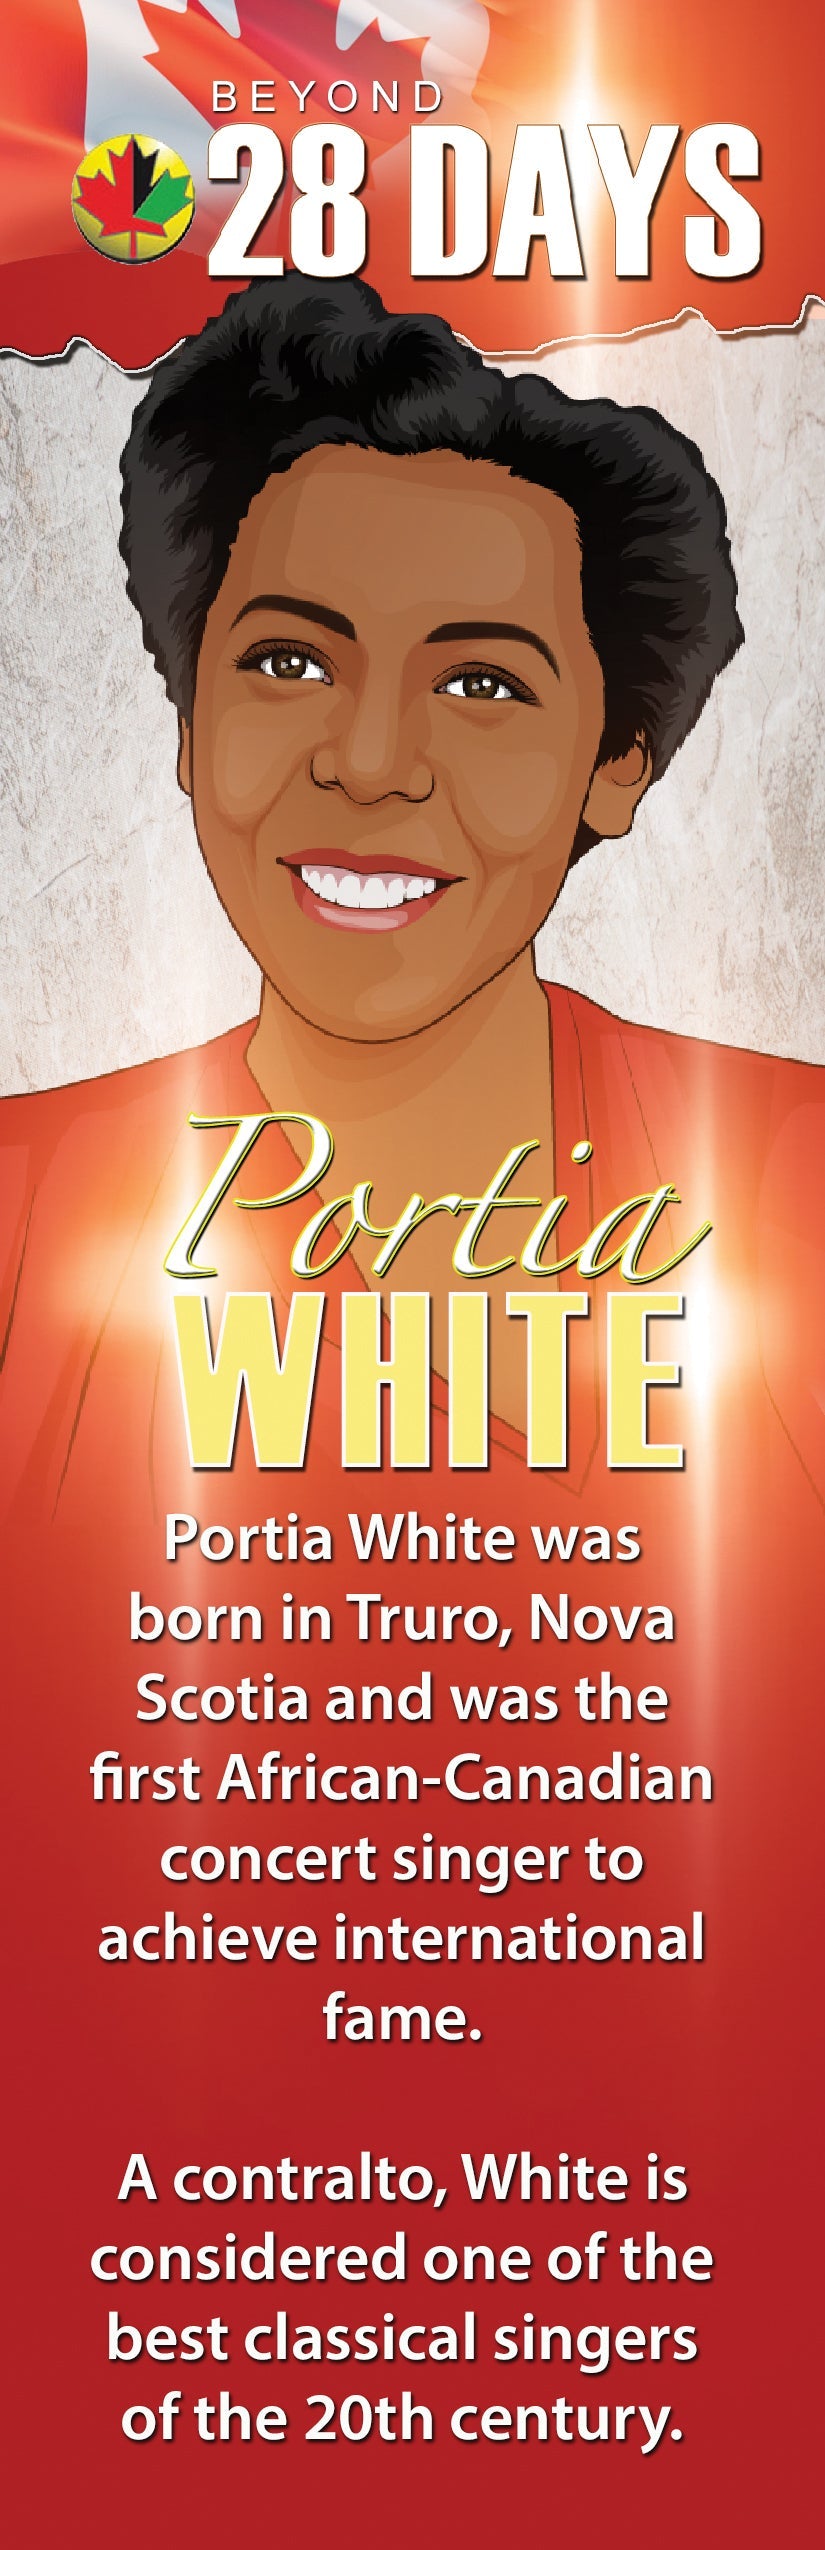 Classical singer Portia White